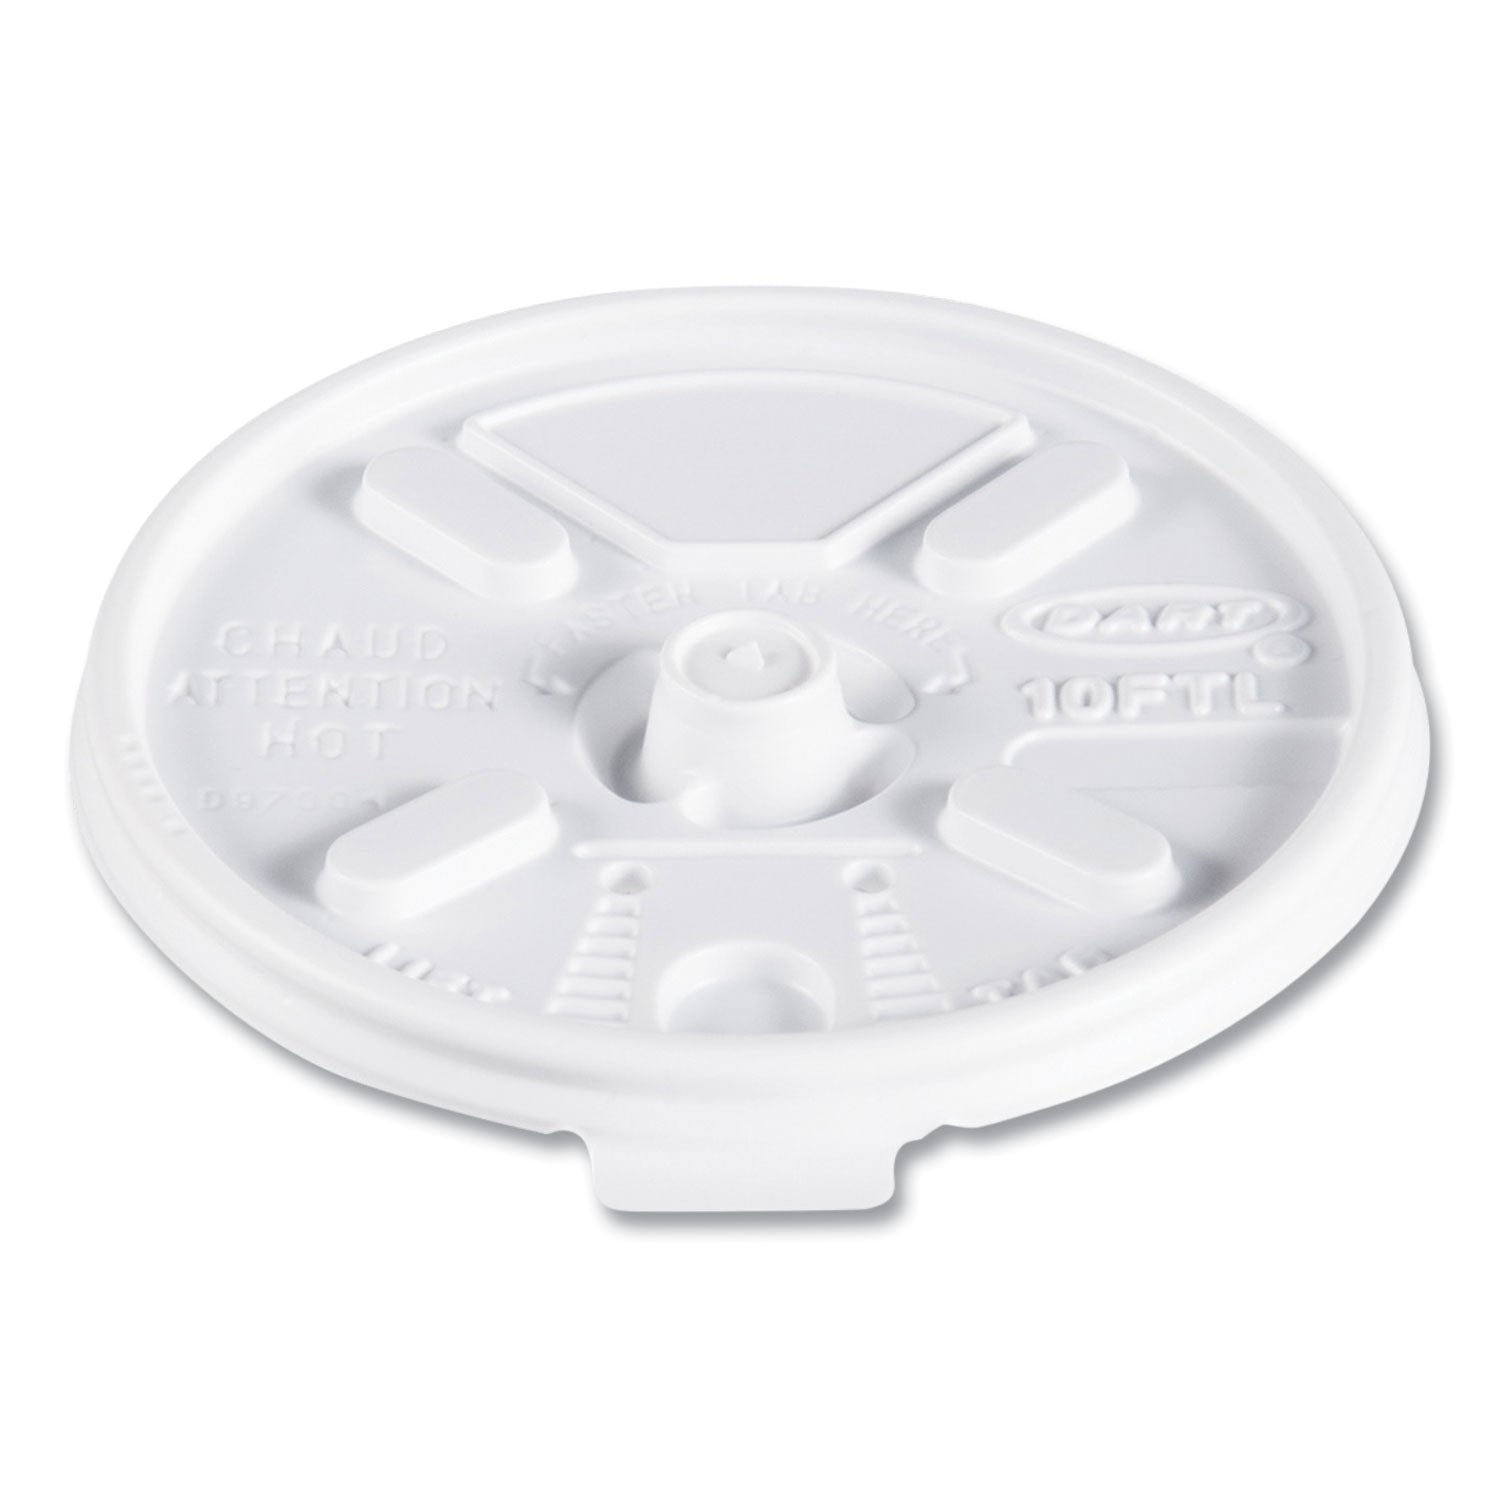 Lift n' Lock Plastic Hot Cup Lids, Fits 10 oz Cups, White, 1,000/Carton - 